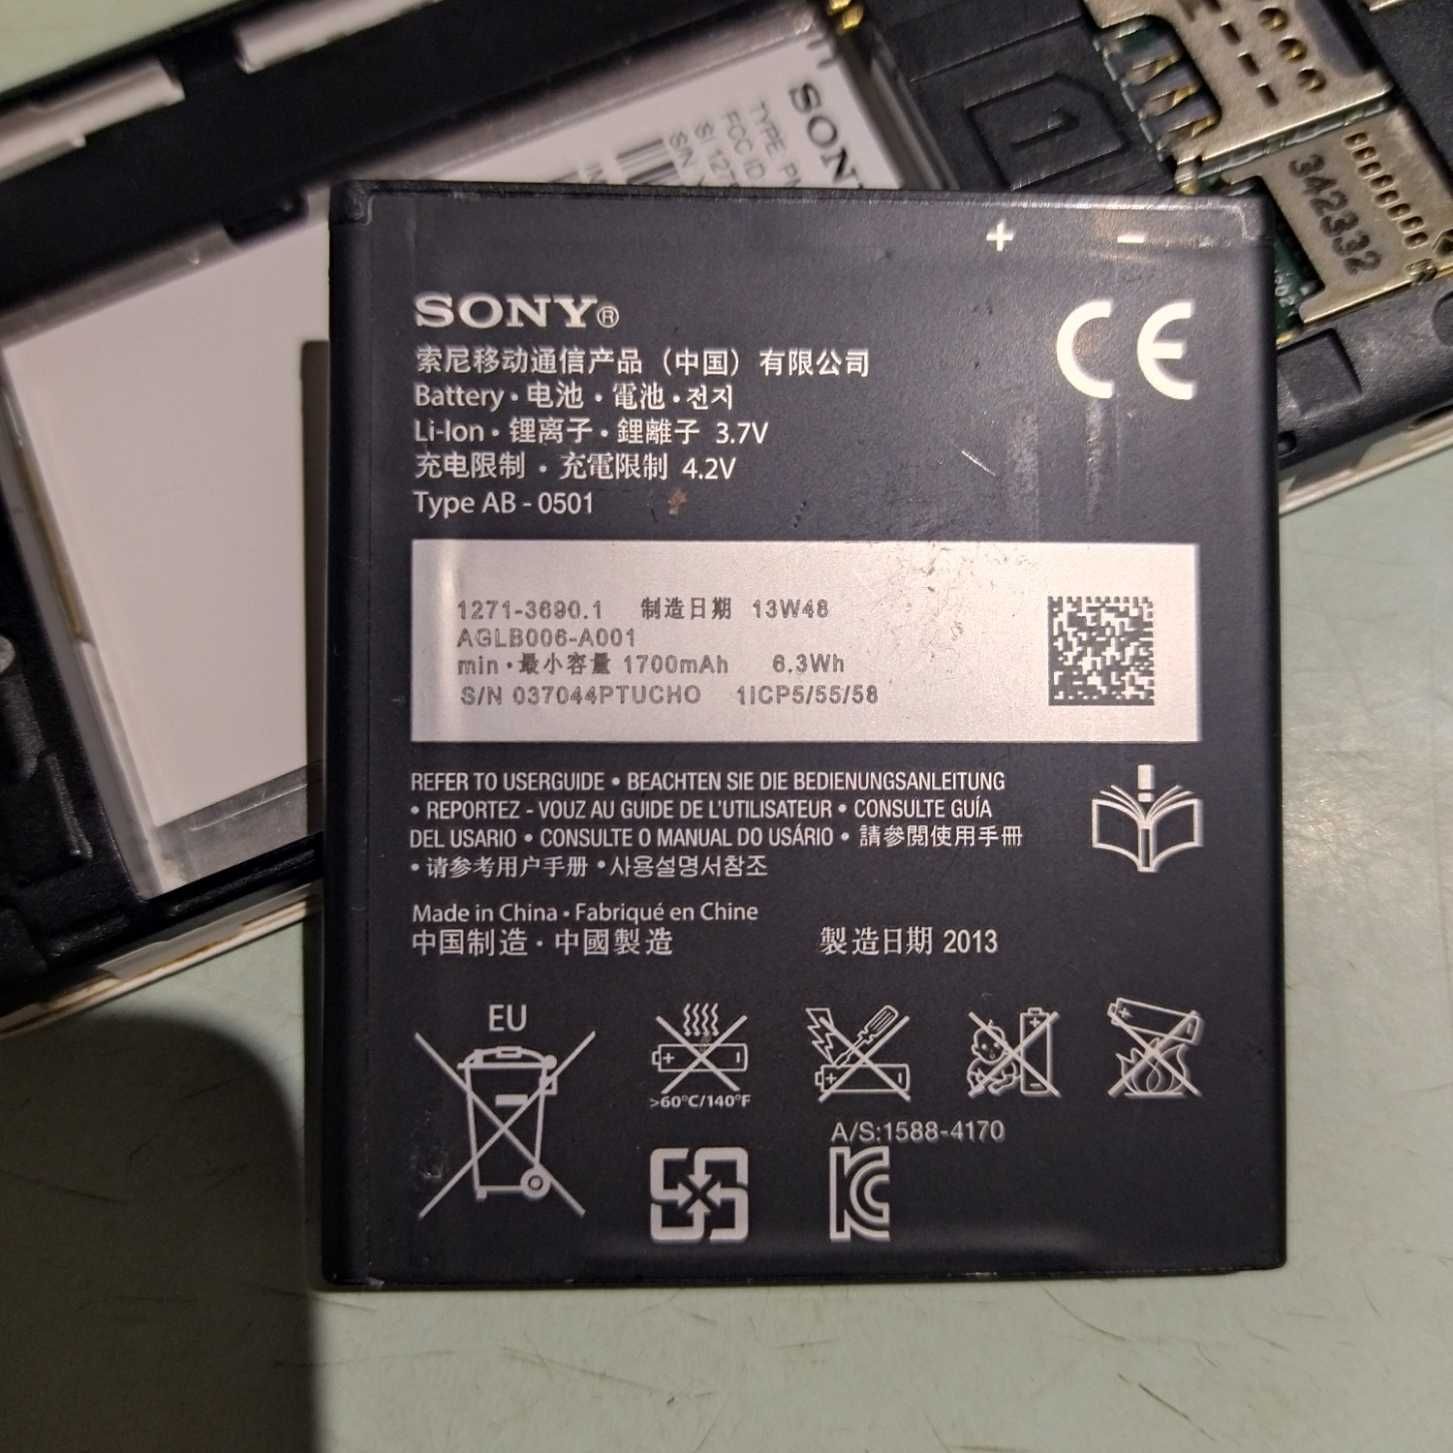 Sony Walkman Xperia M Dual Sim C2005 Wi-Fi роутер 3G